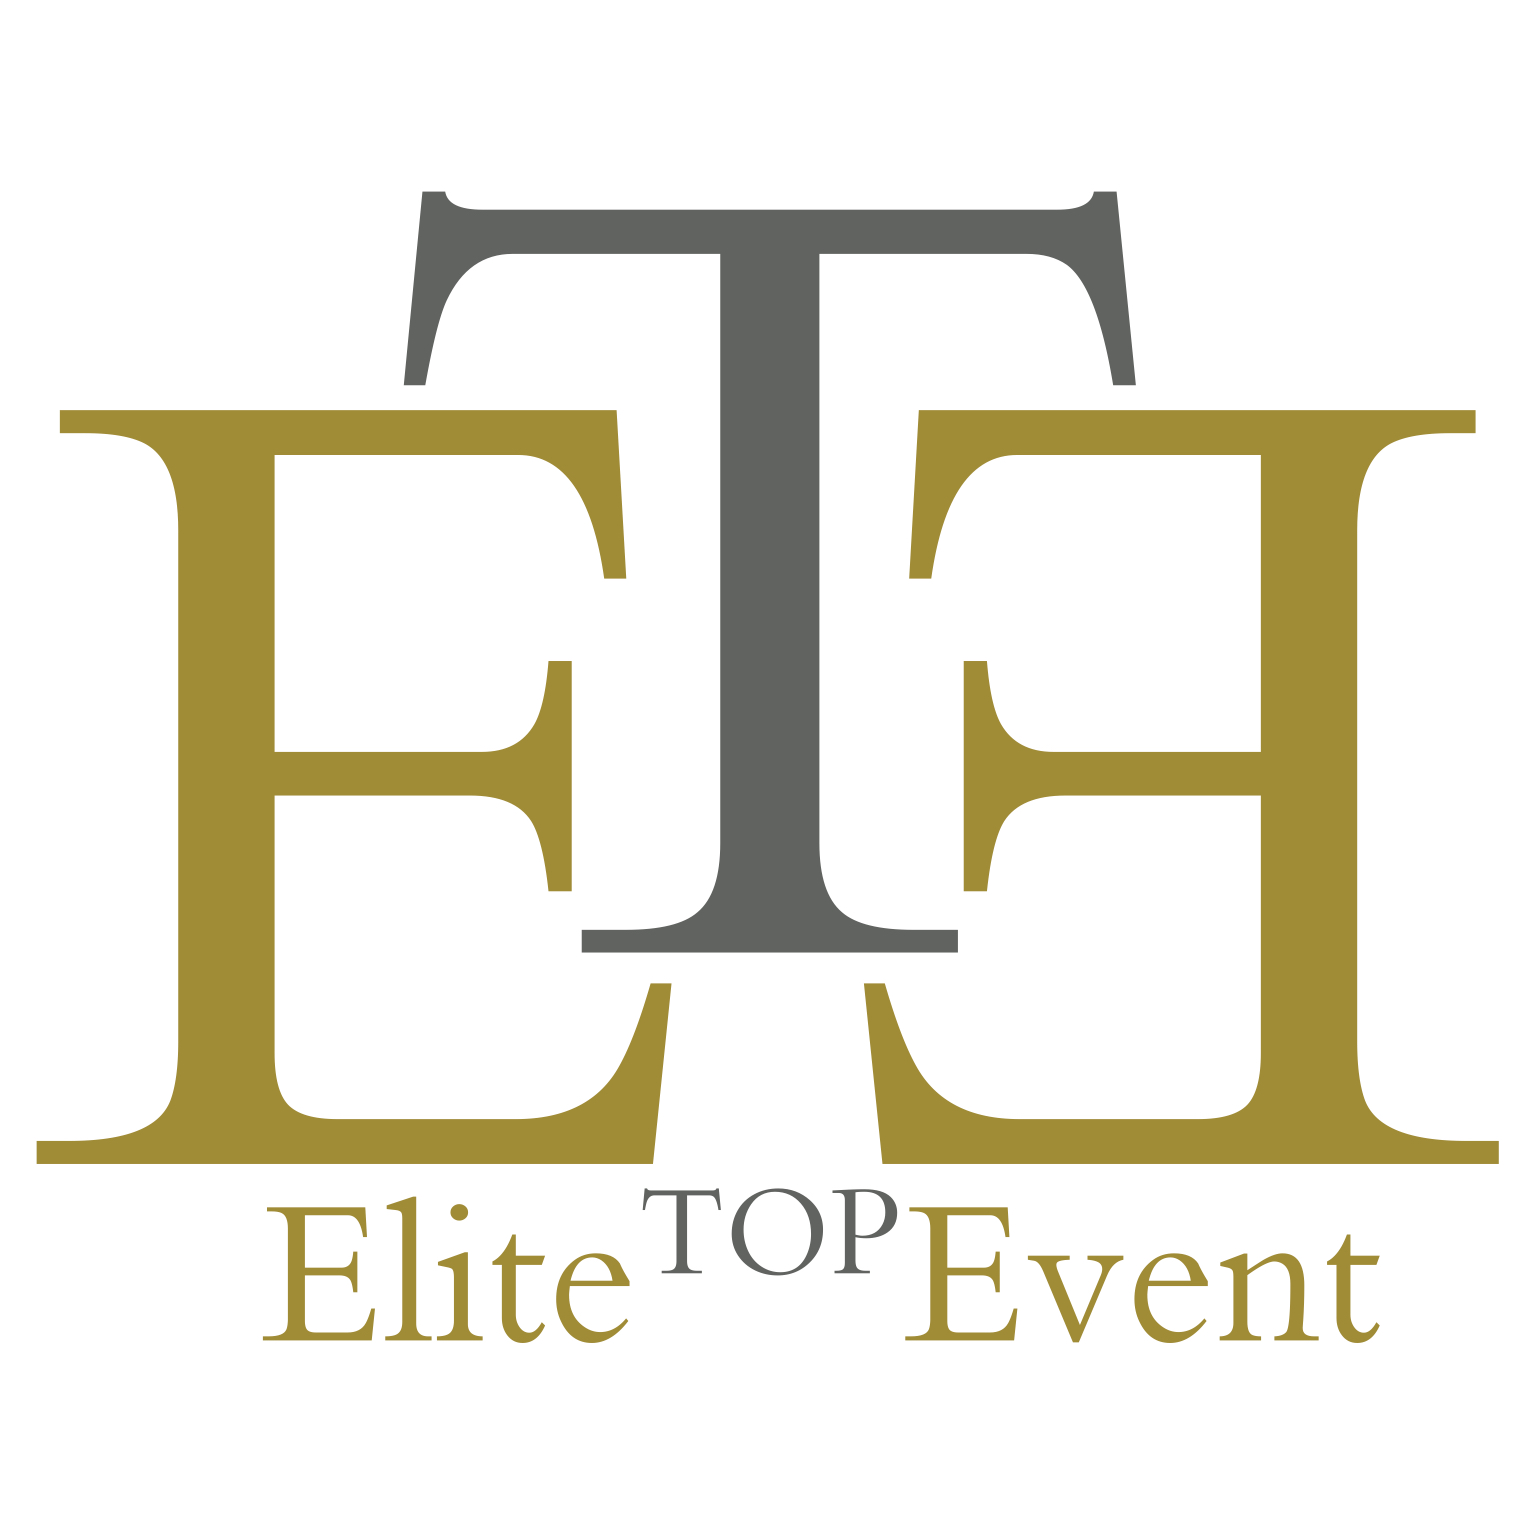 Elite Top Event